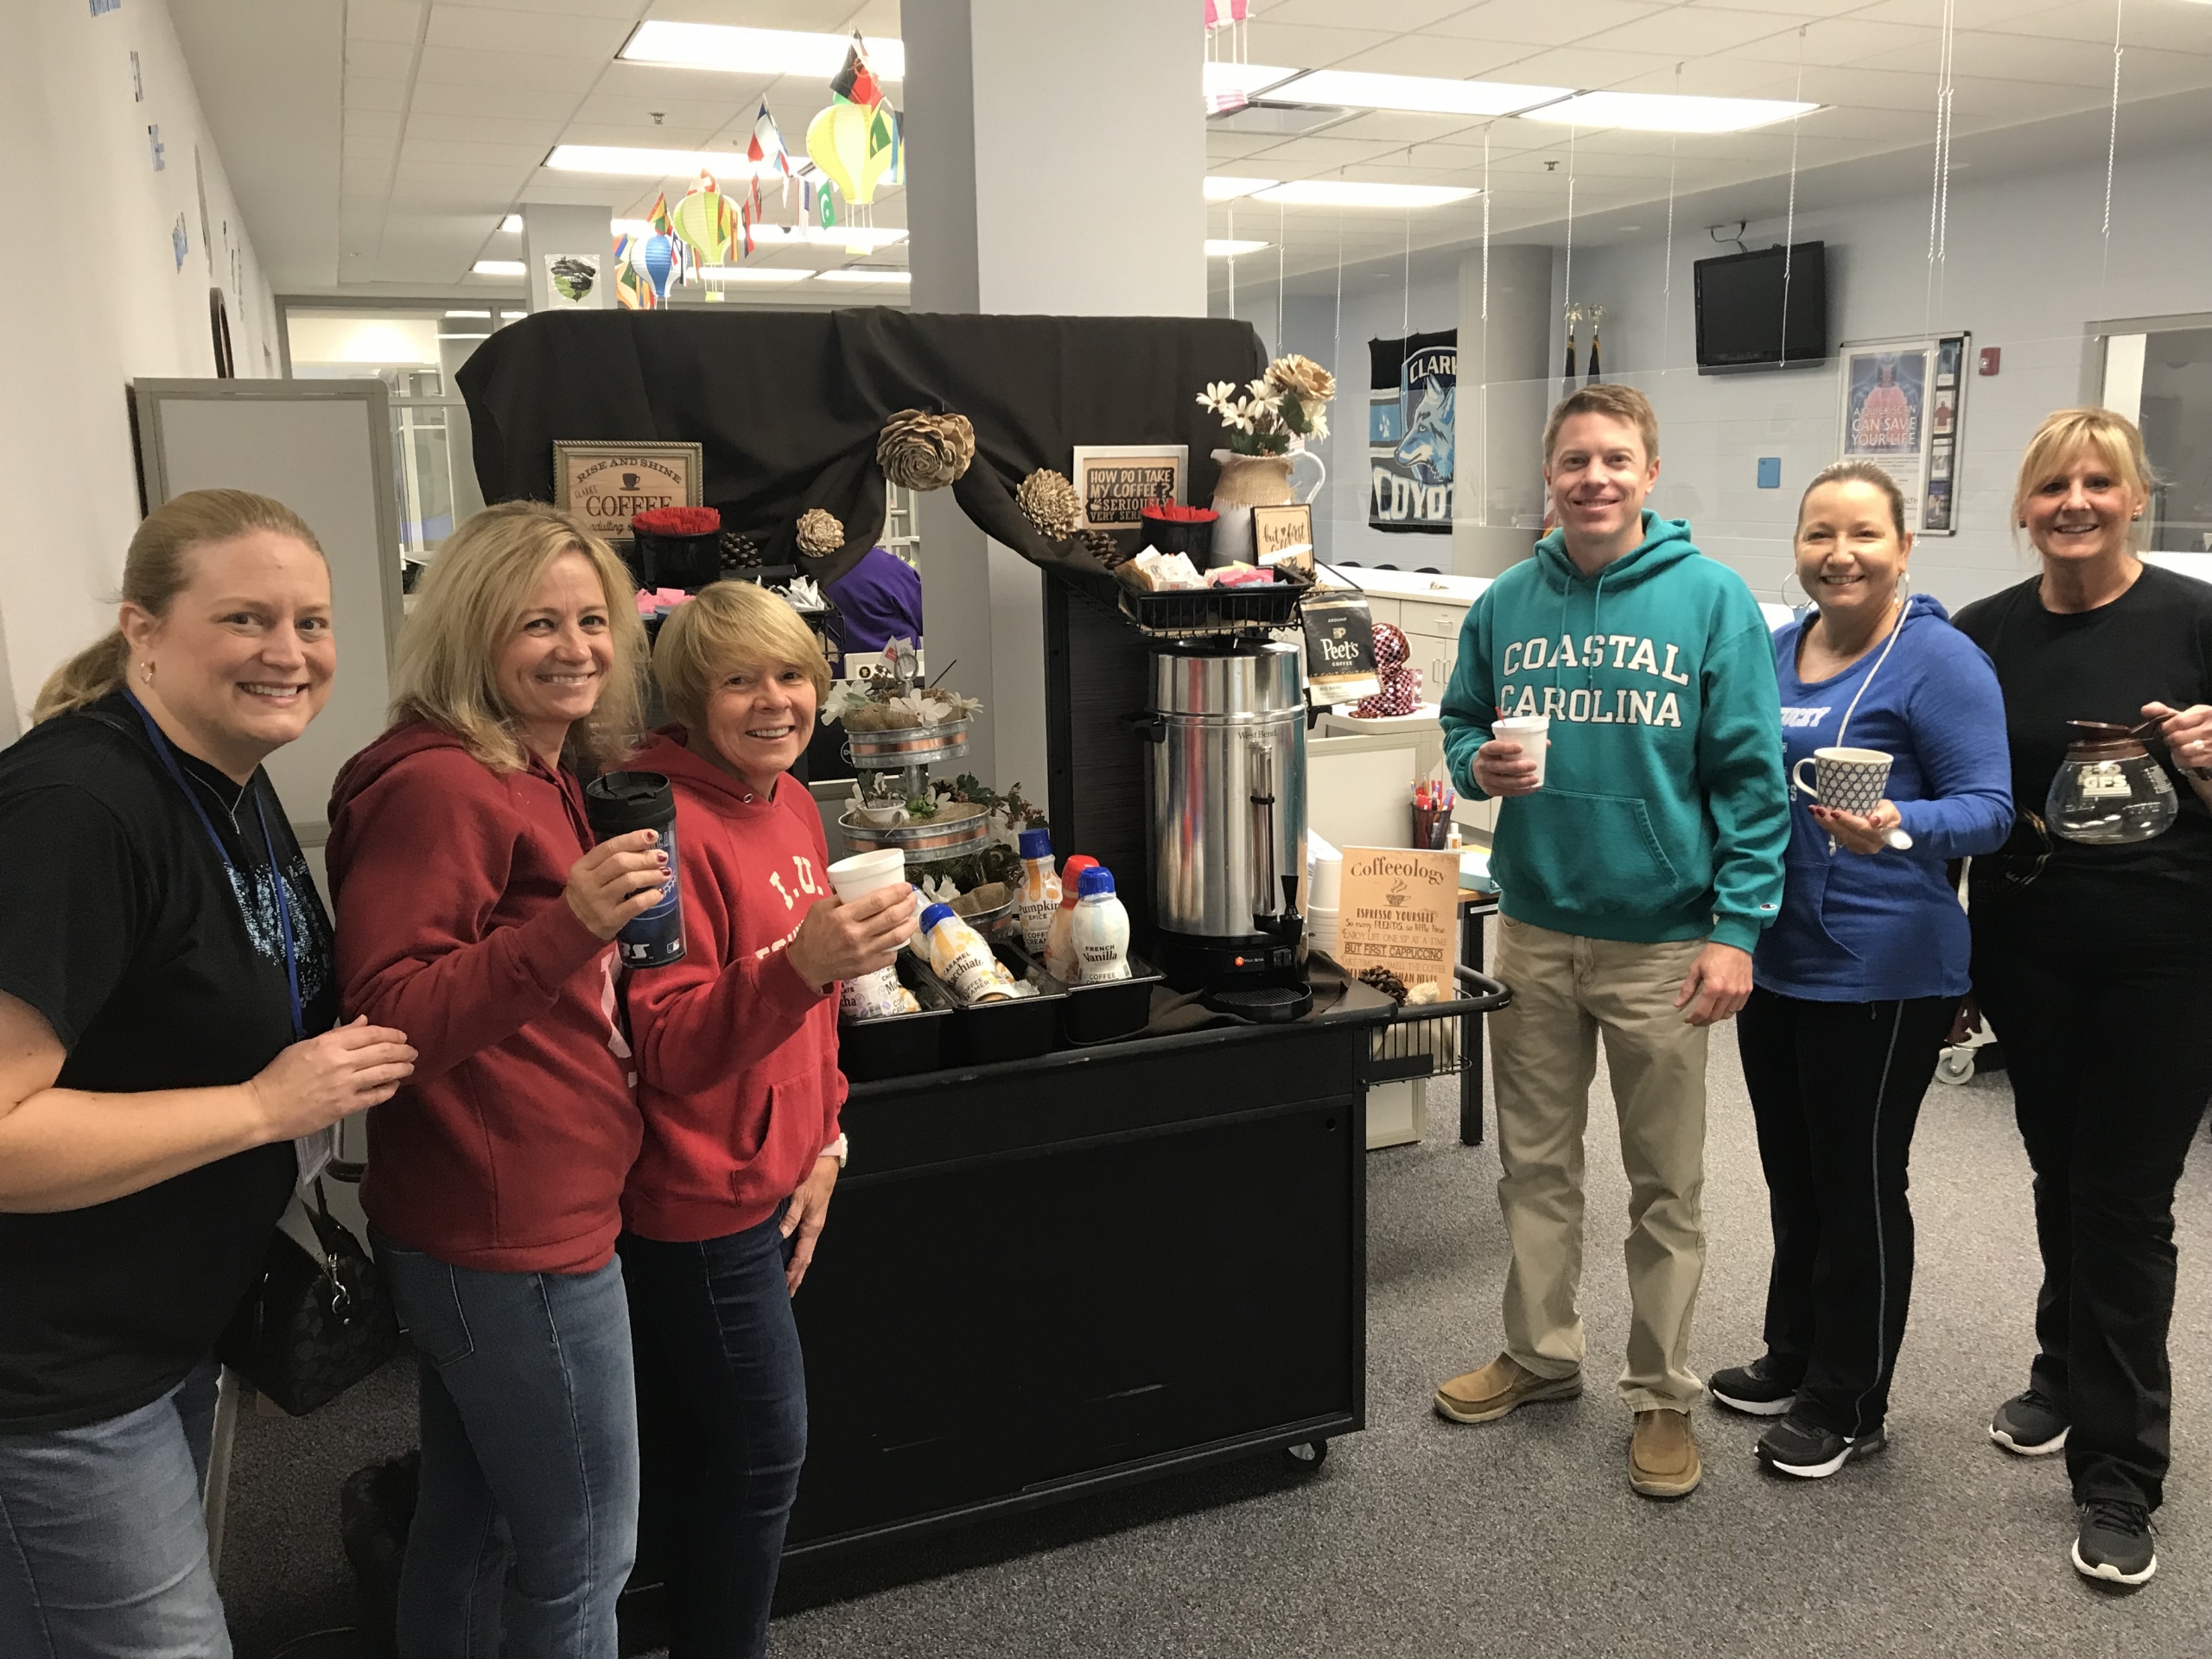 CMS staff enjoying National Coffee Day, thank you Food Service!!